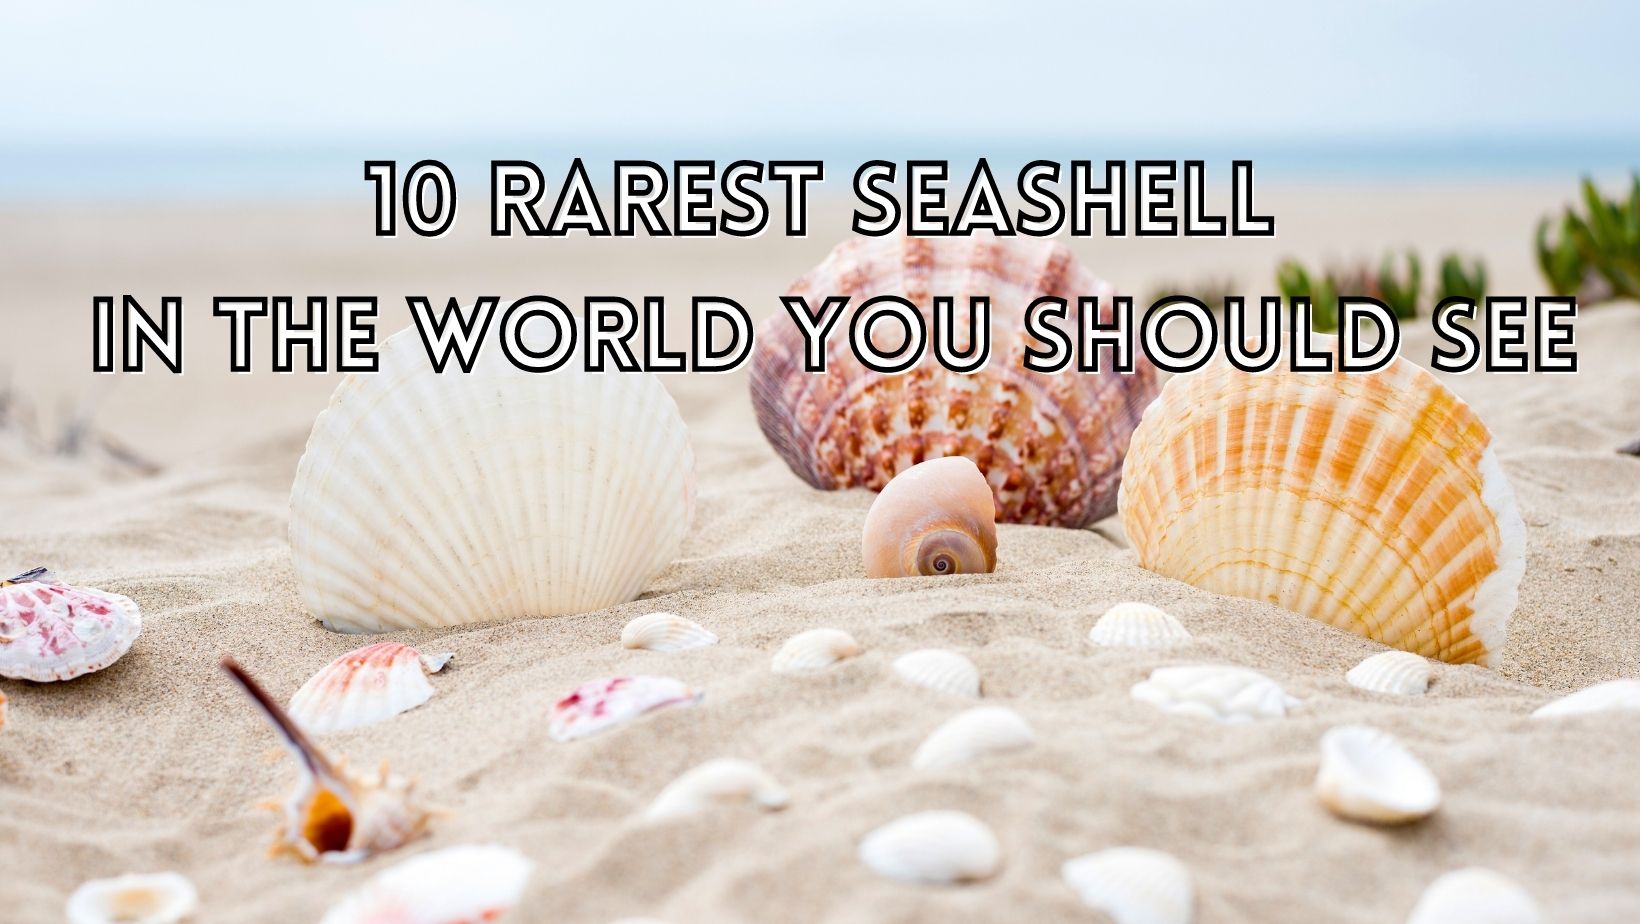 Rarest seashell in the world